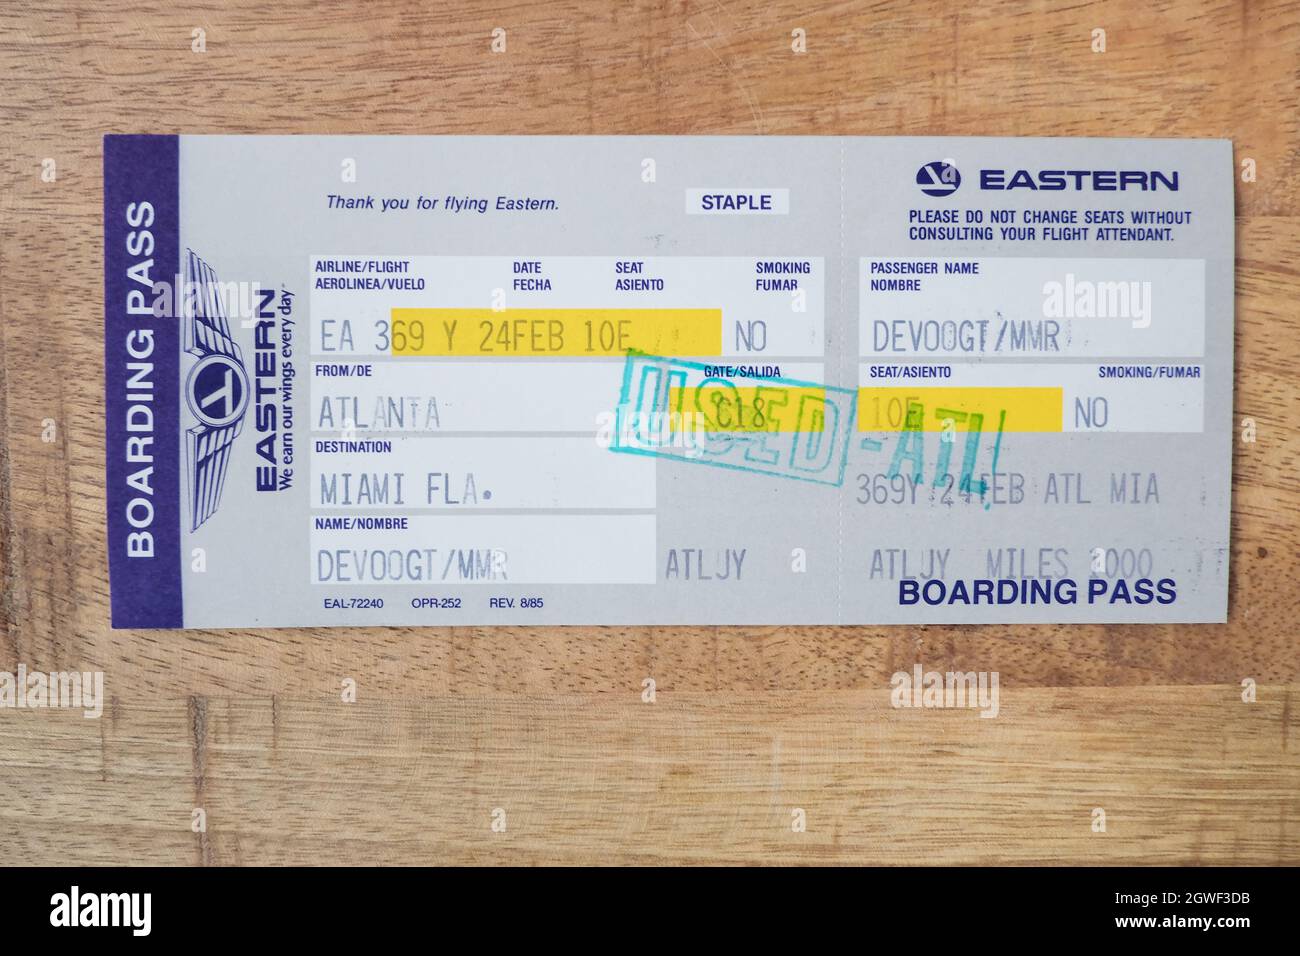 eastern boarding pass 1986 miami Stock Photo